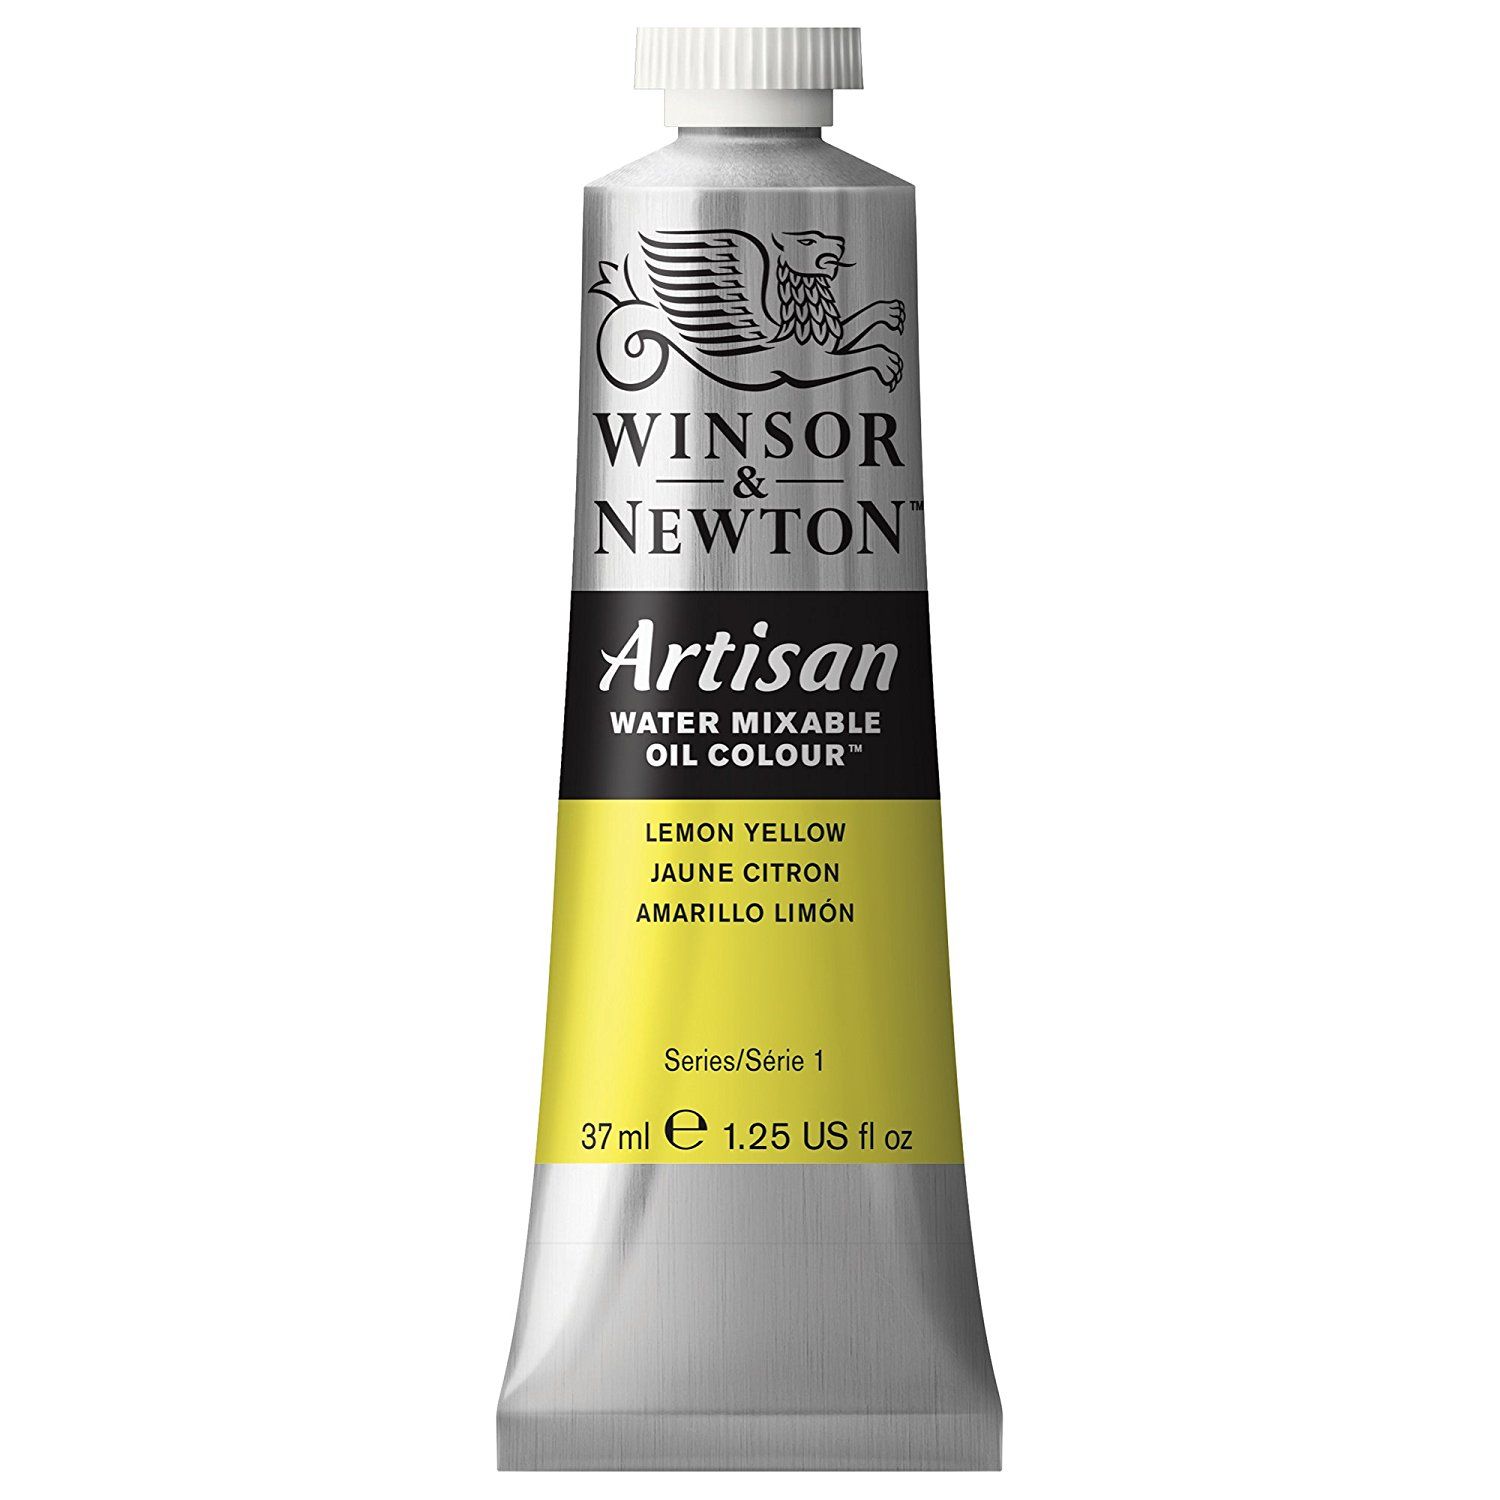 Artisan Water Mixable Oil - Lemon Yellow 37ml